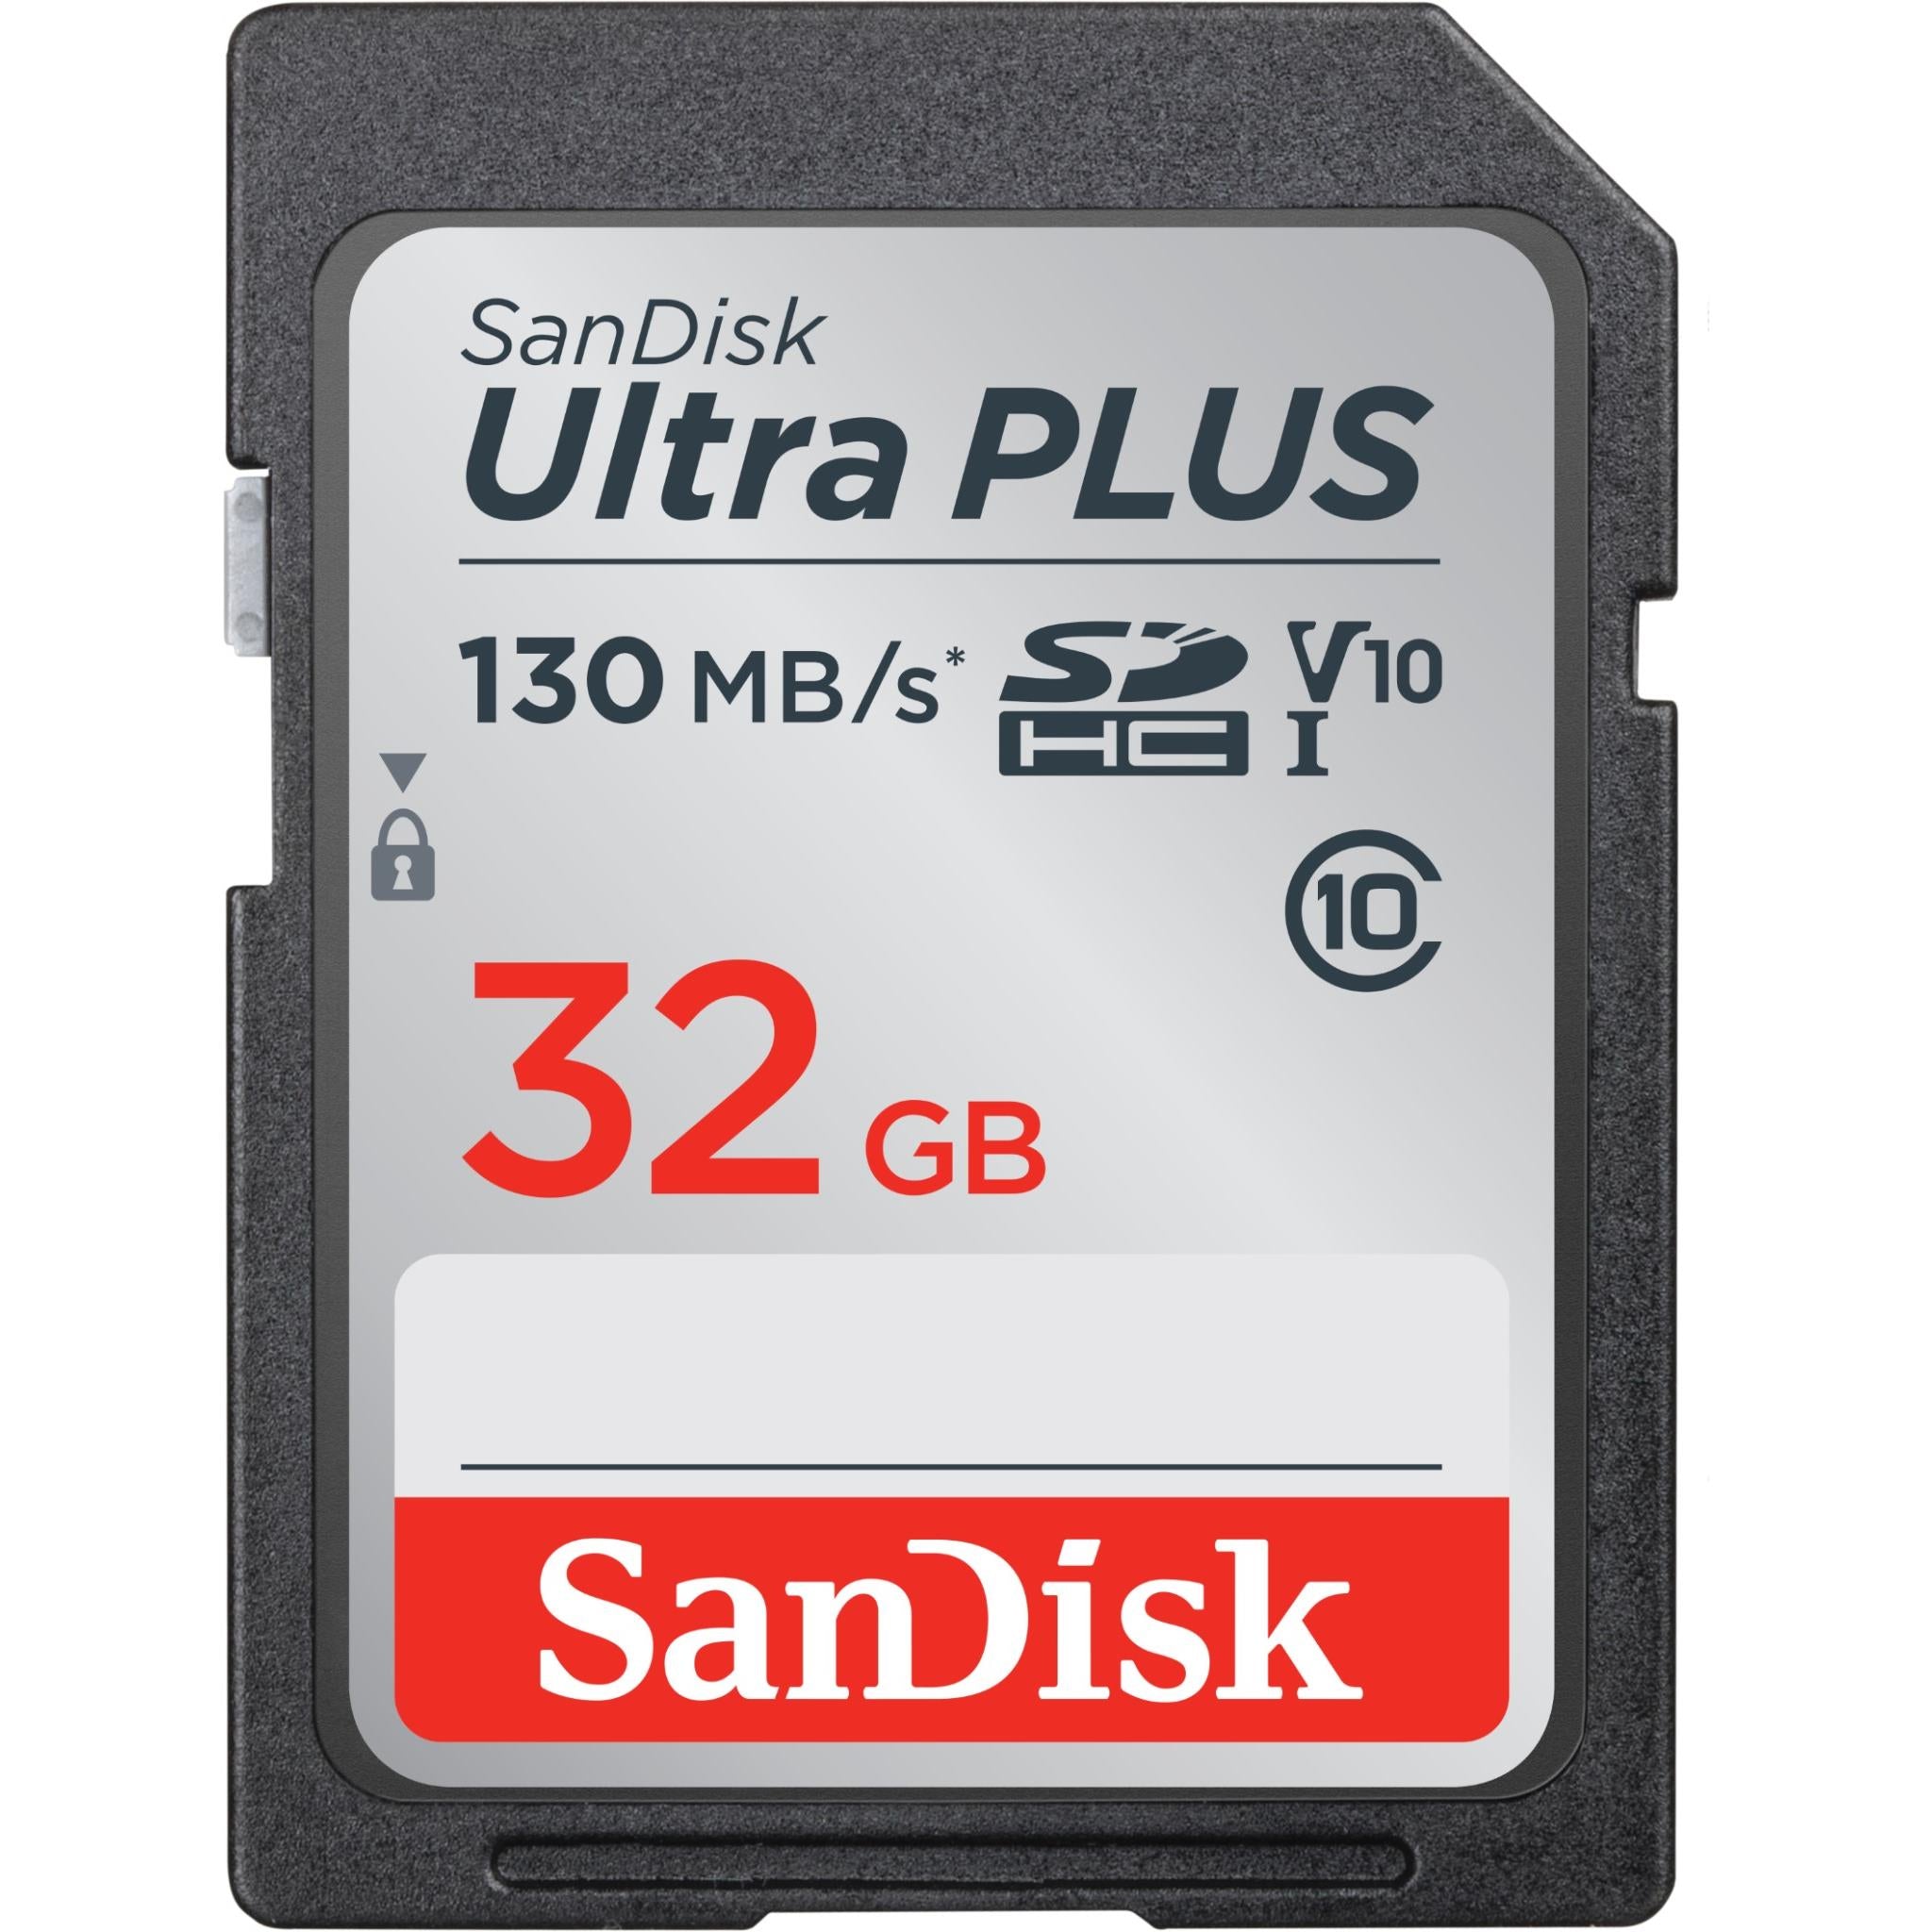 sandisk ultra plus sdhc 32gb 130mb/s memory card